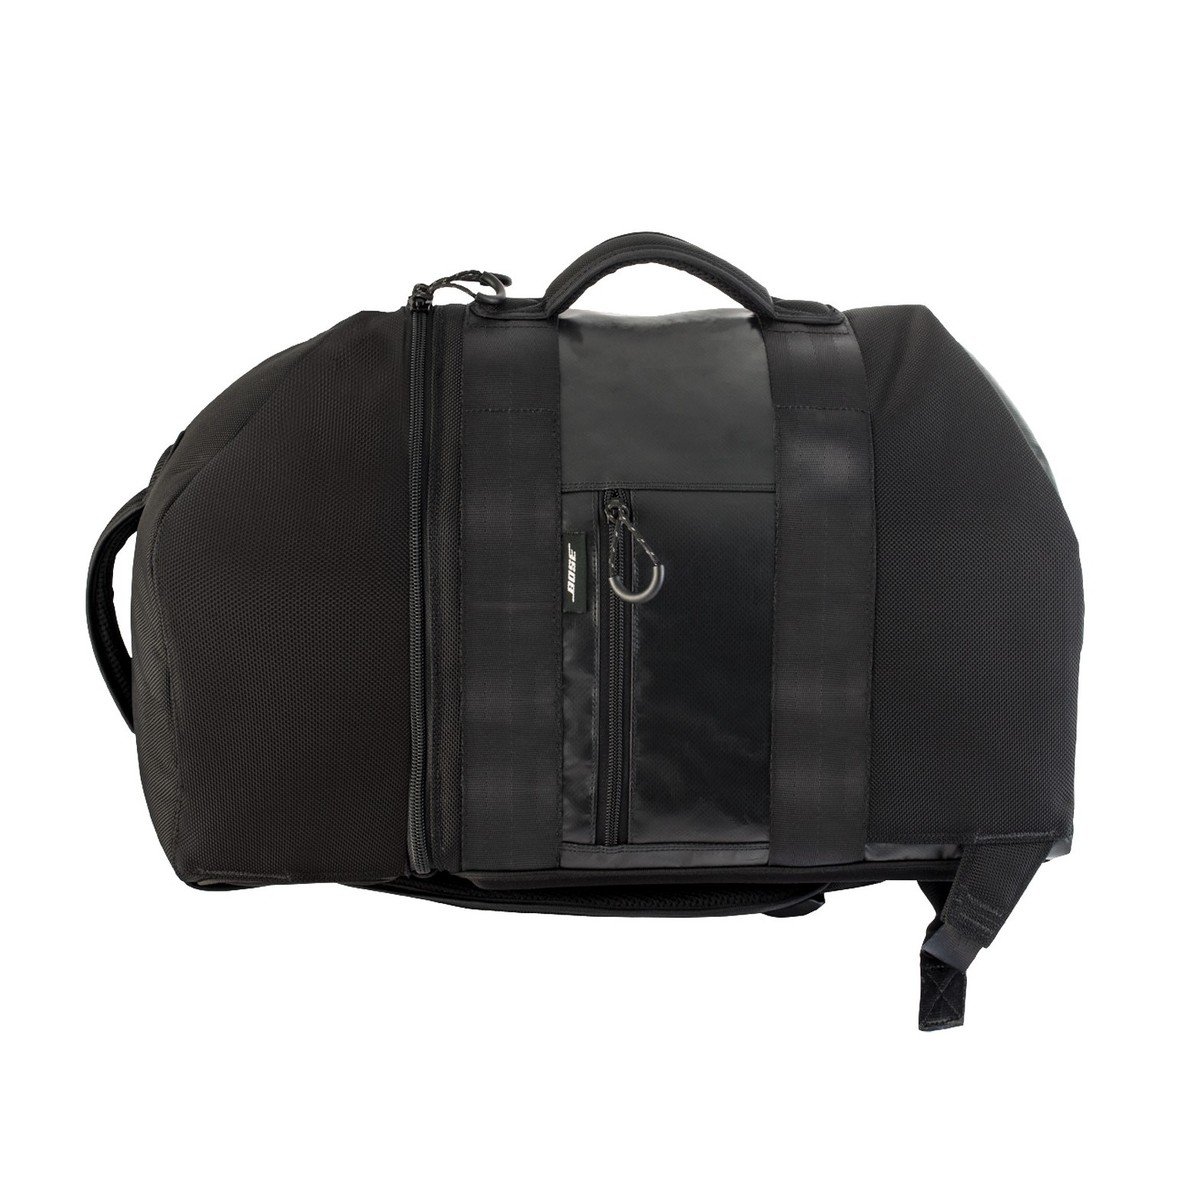 Bose S1 Pro Backpack